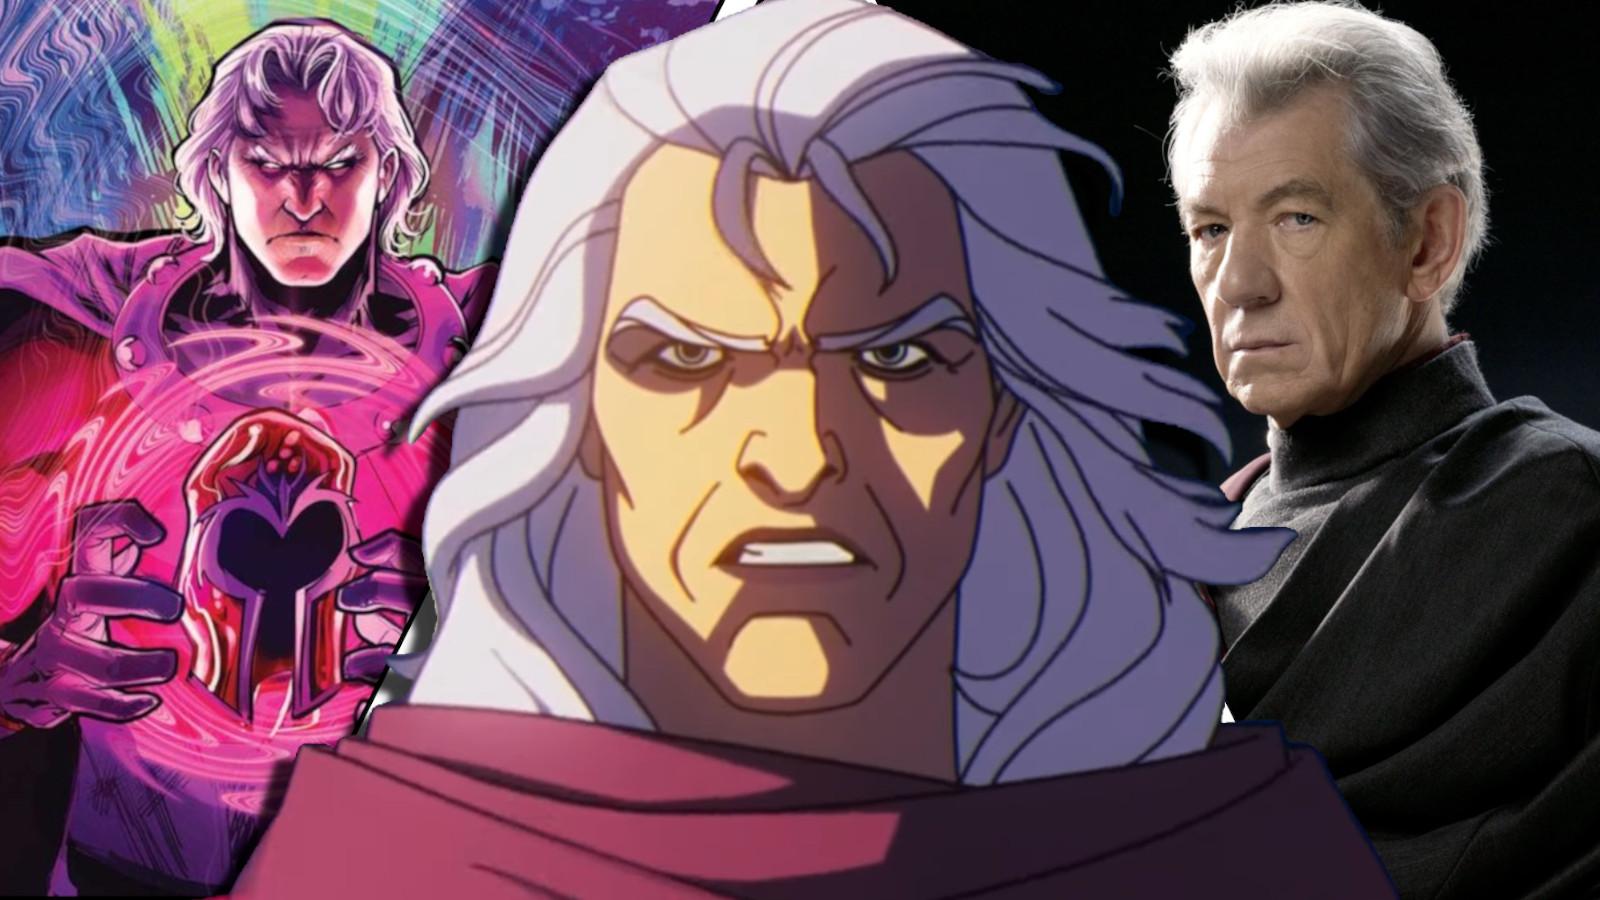 Magneto in X-Men comics, X-Men '97, and X-Men movies.